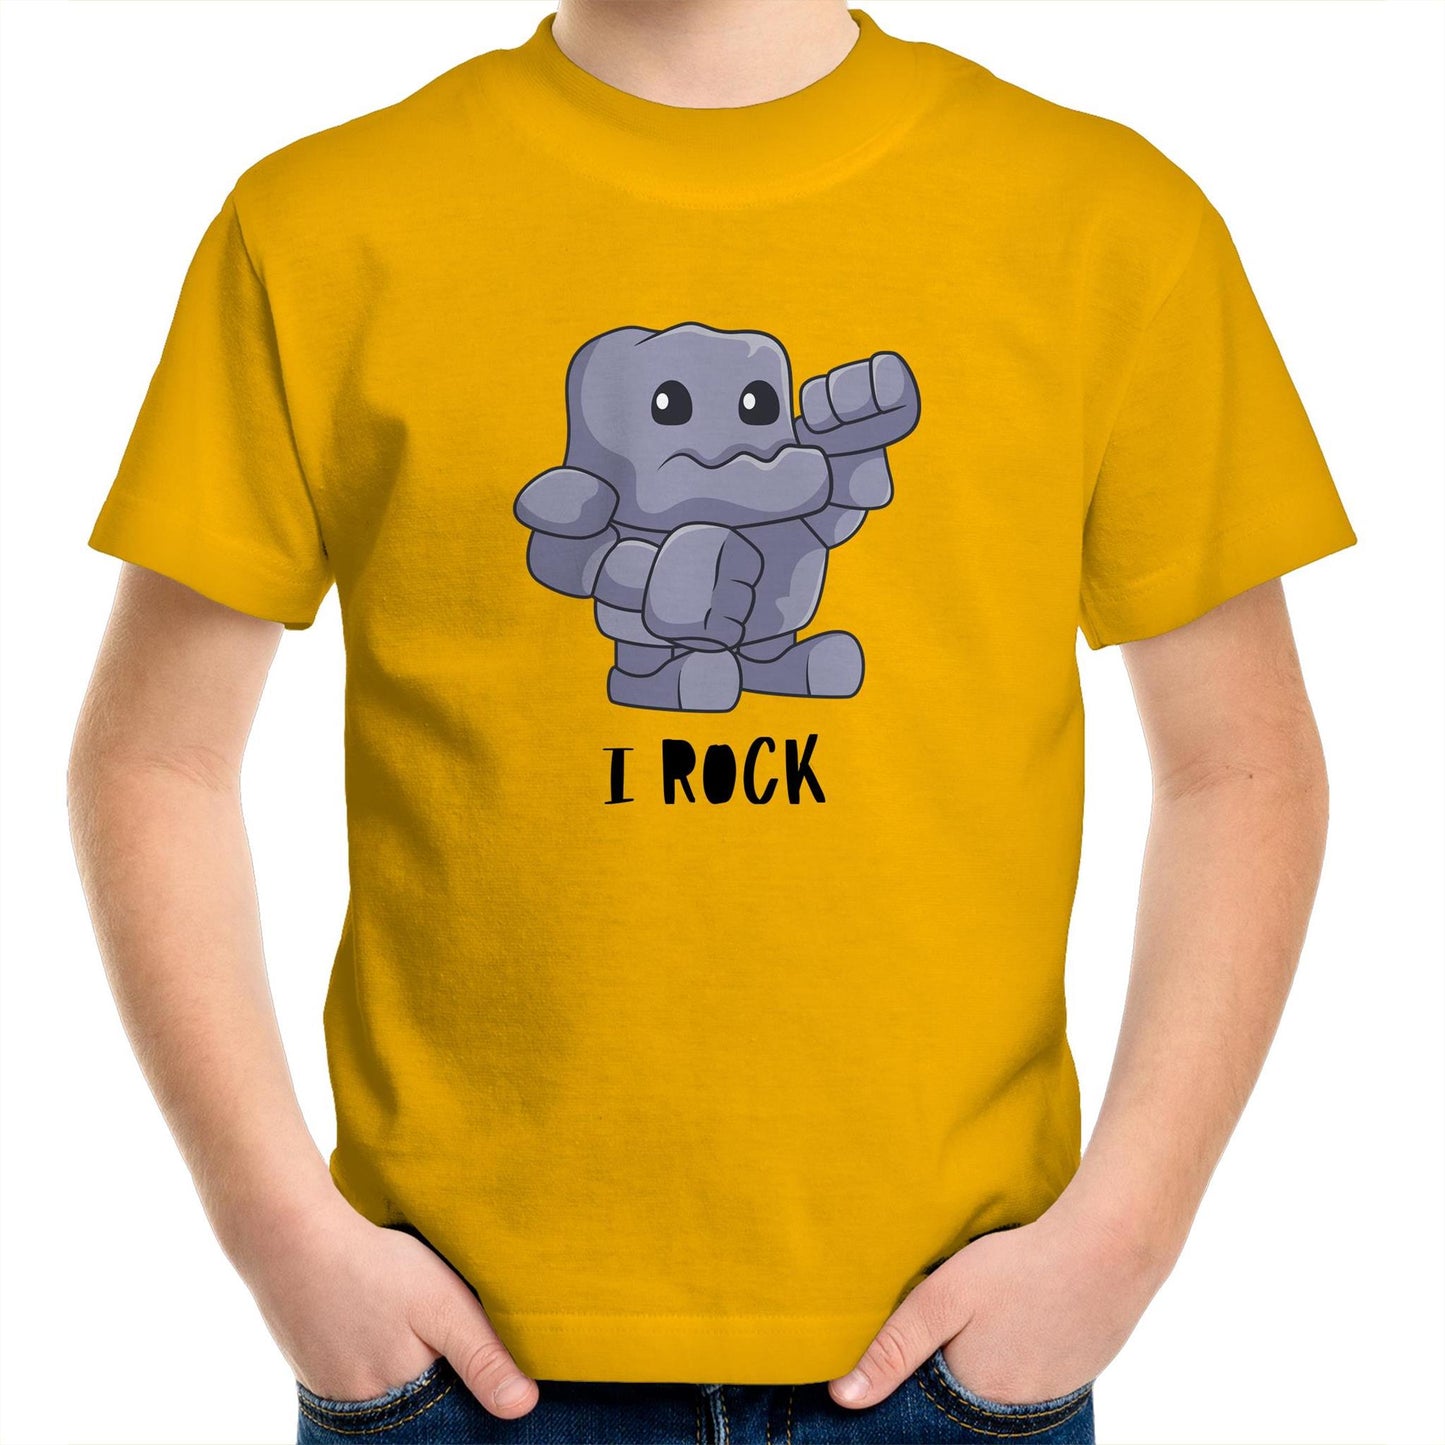 I Rock - Kids Youth T-Shirt Gold Kids Youth T-shirt Music